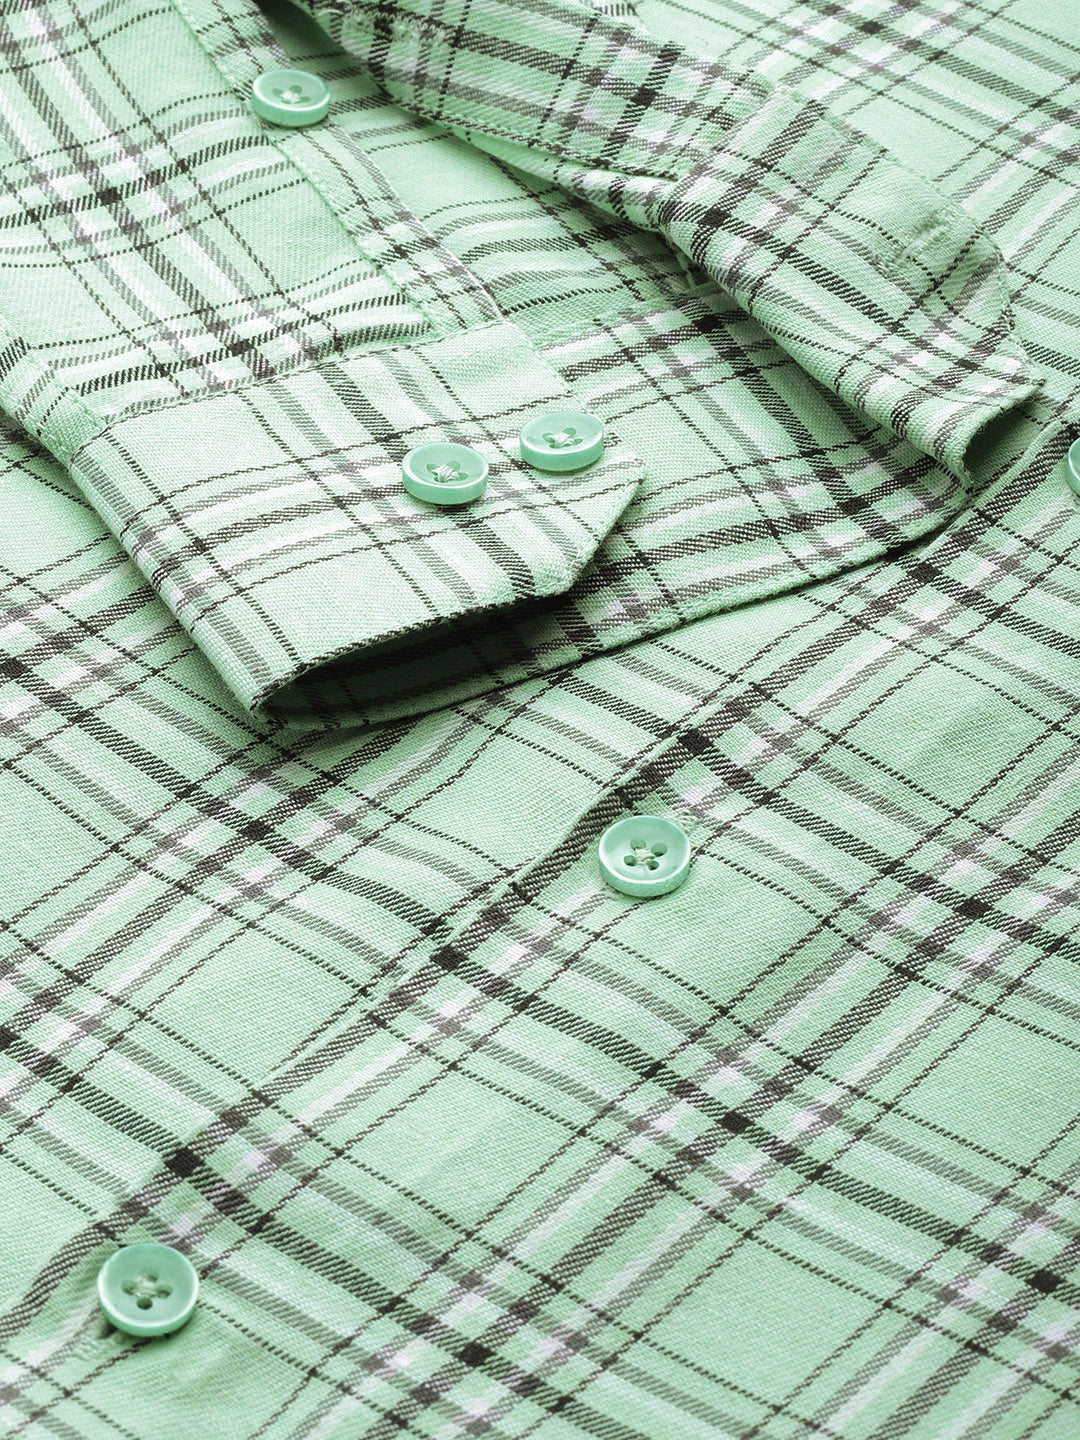 Men's Cotton Checked Formal Shirts ( SF 791Green ) - Jainish